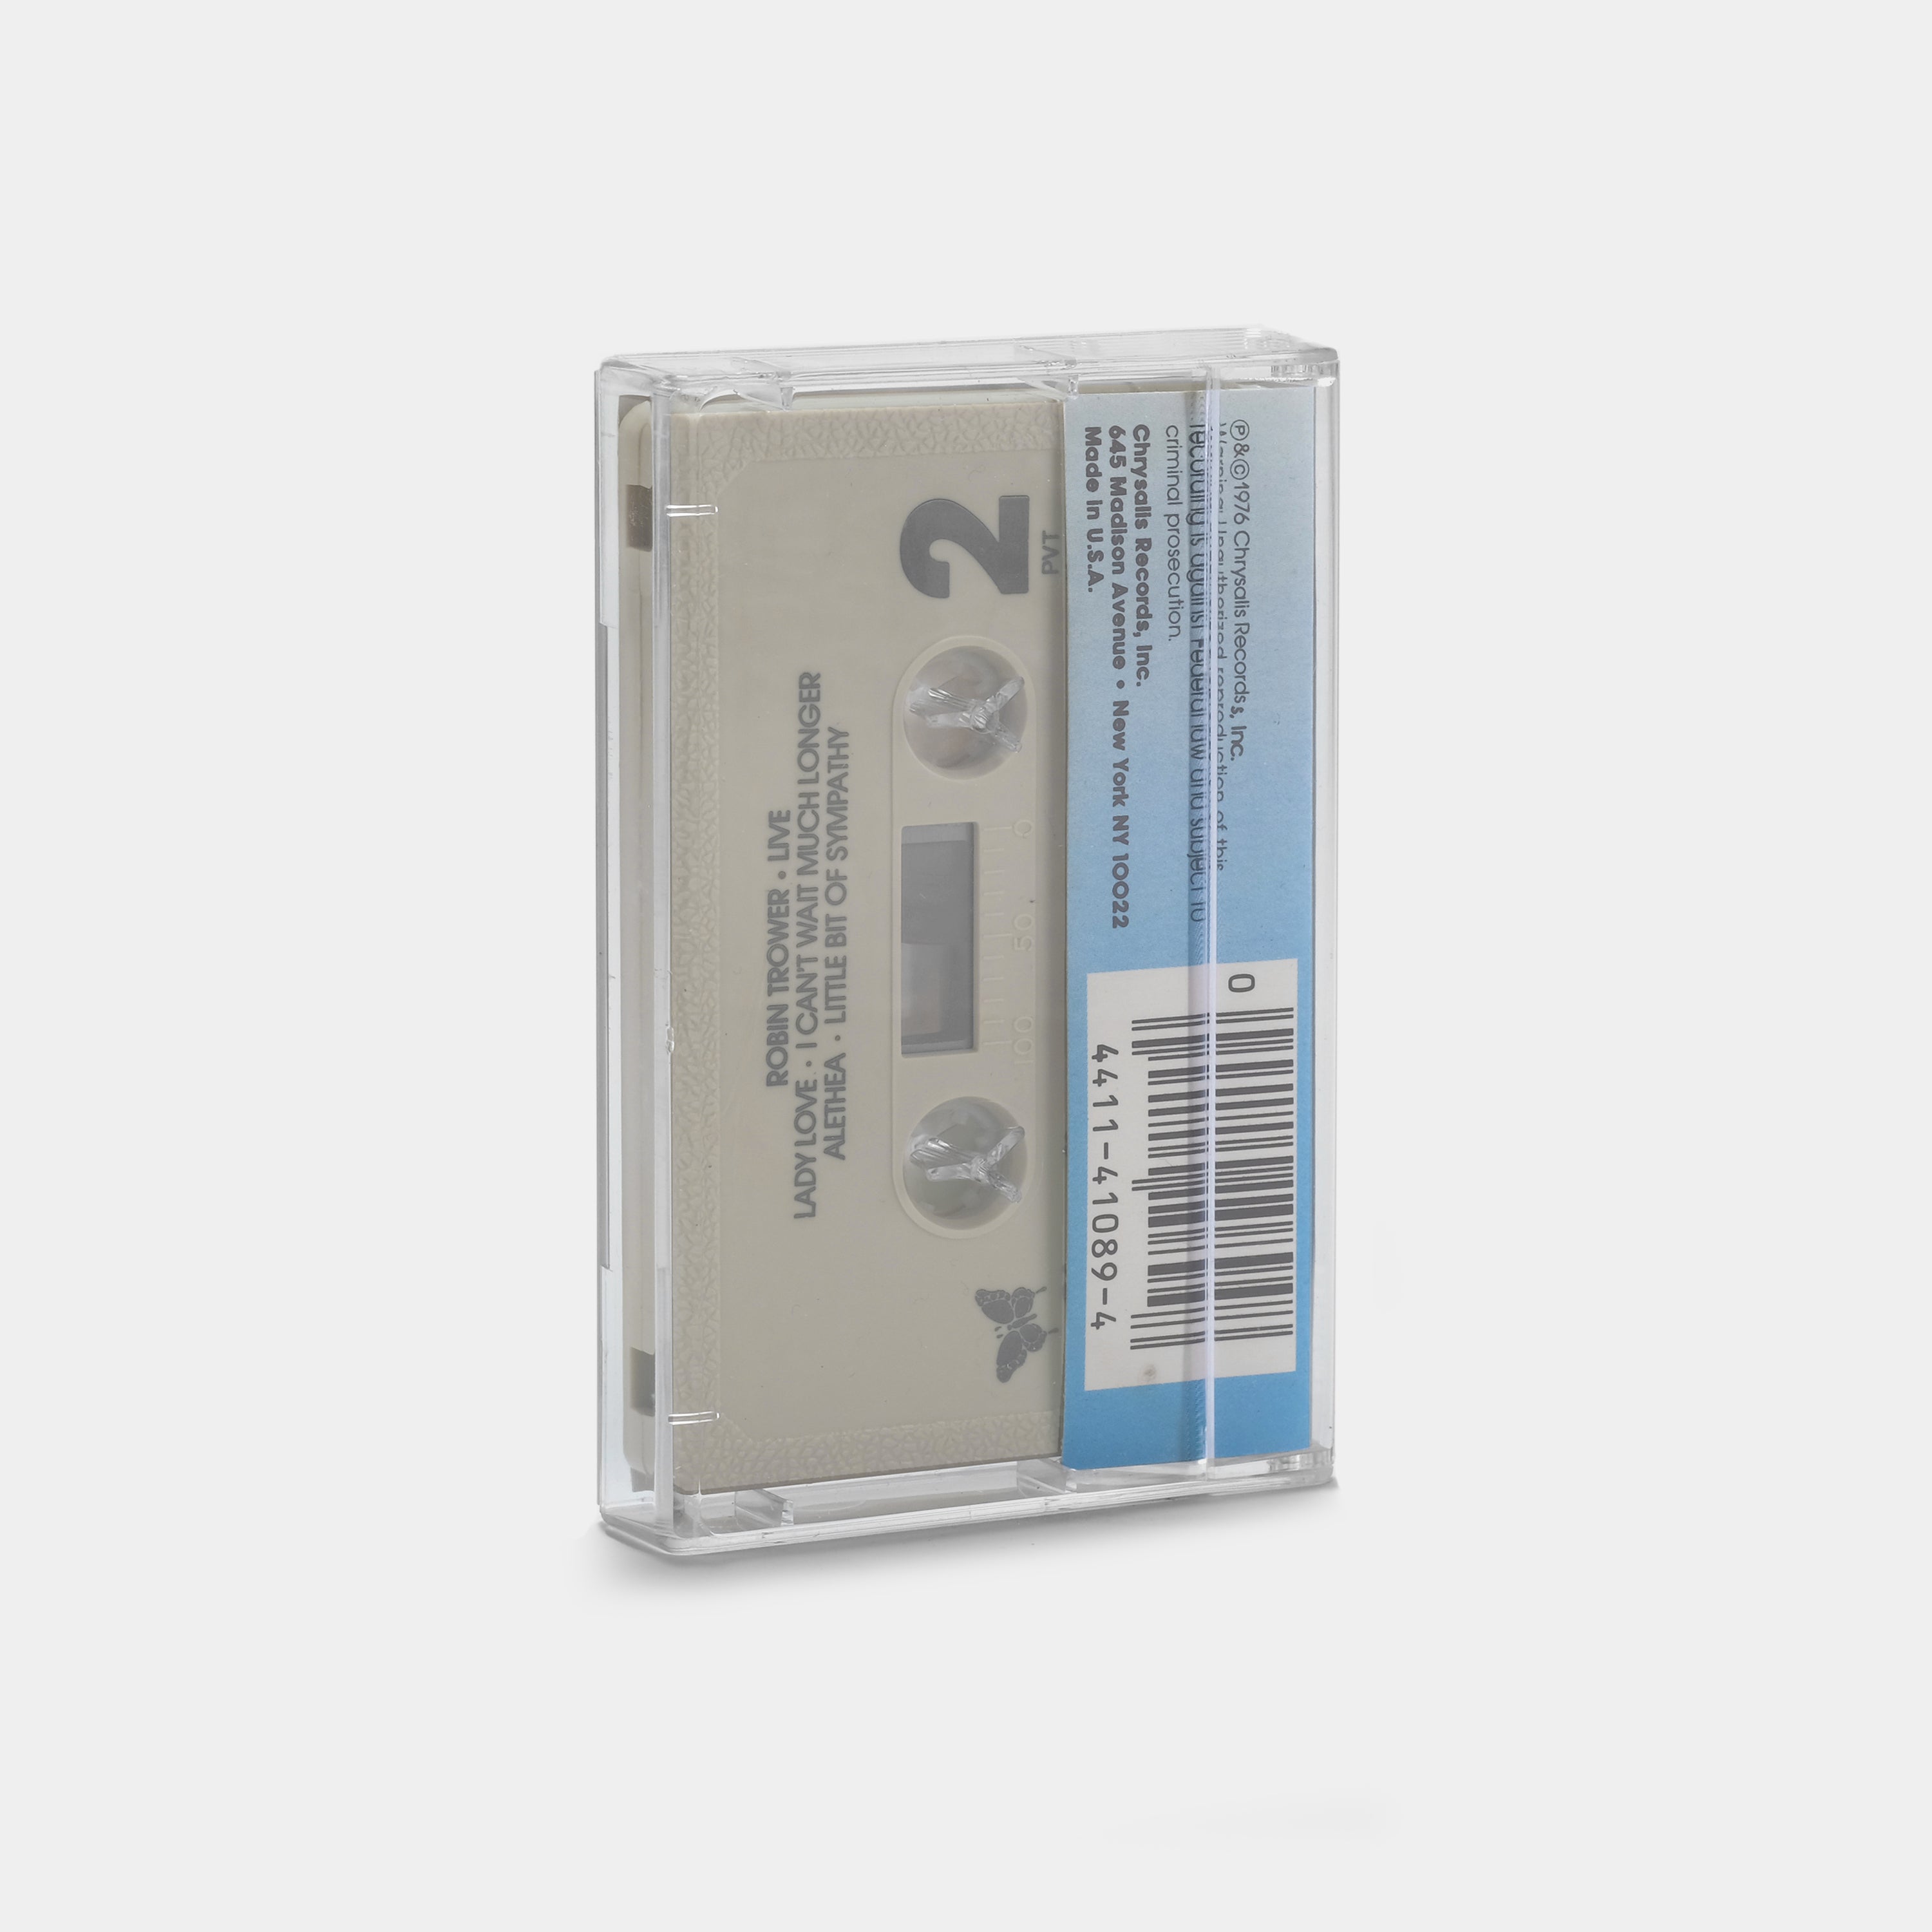 Robin Trower - Robin Trower Live! Cassette Tape